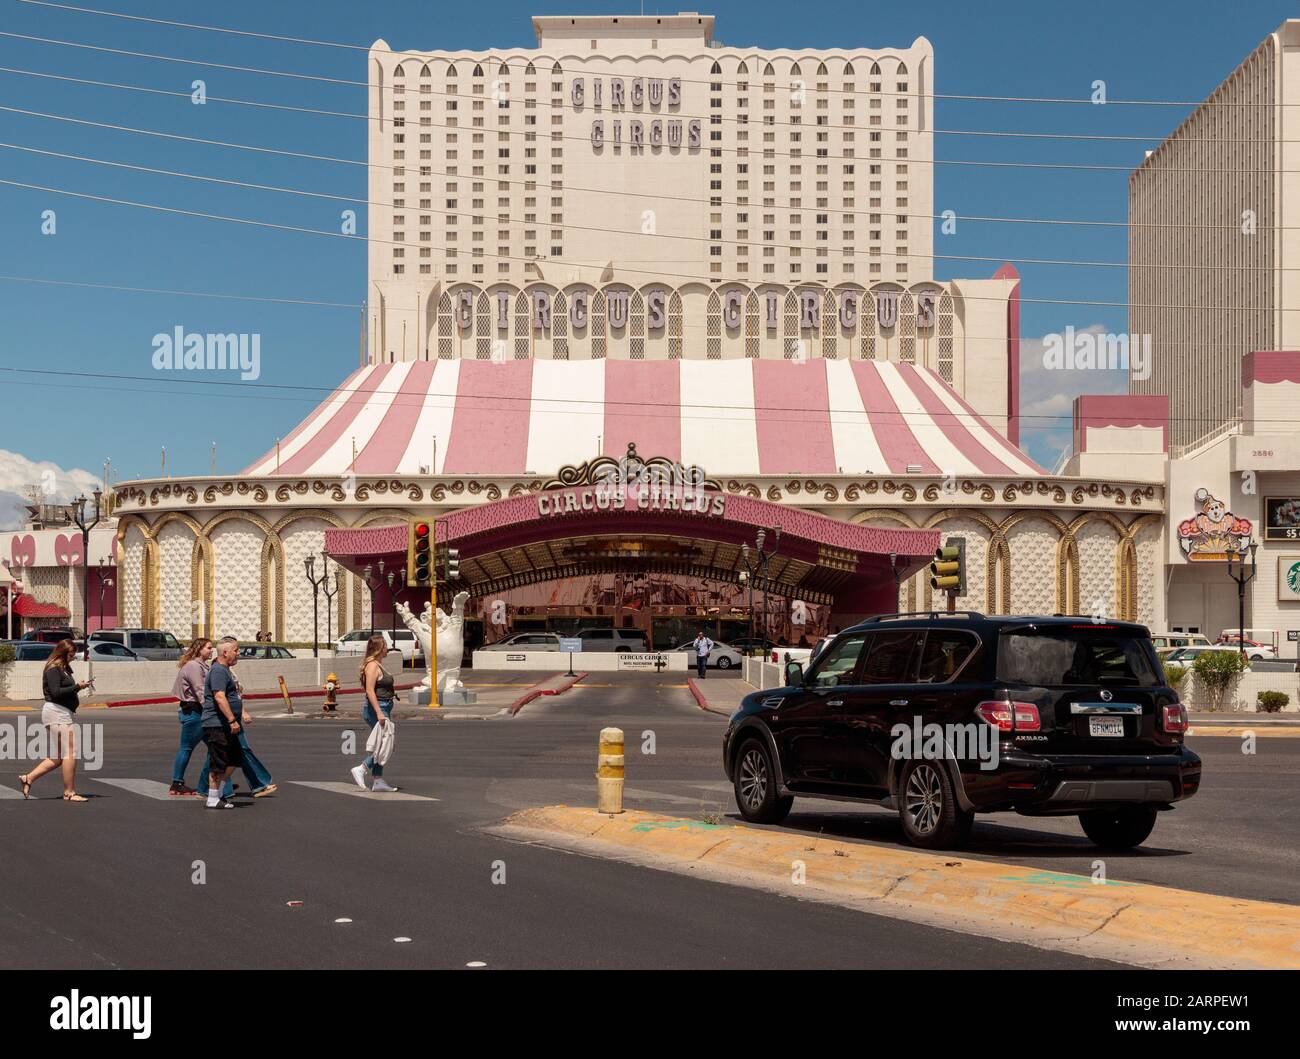 View of Circus Circus hotel Stock Photo